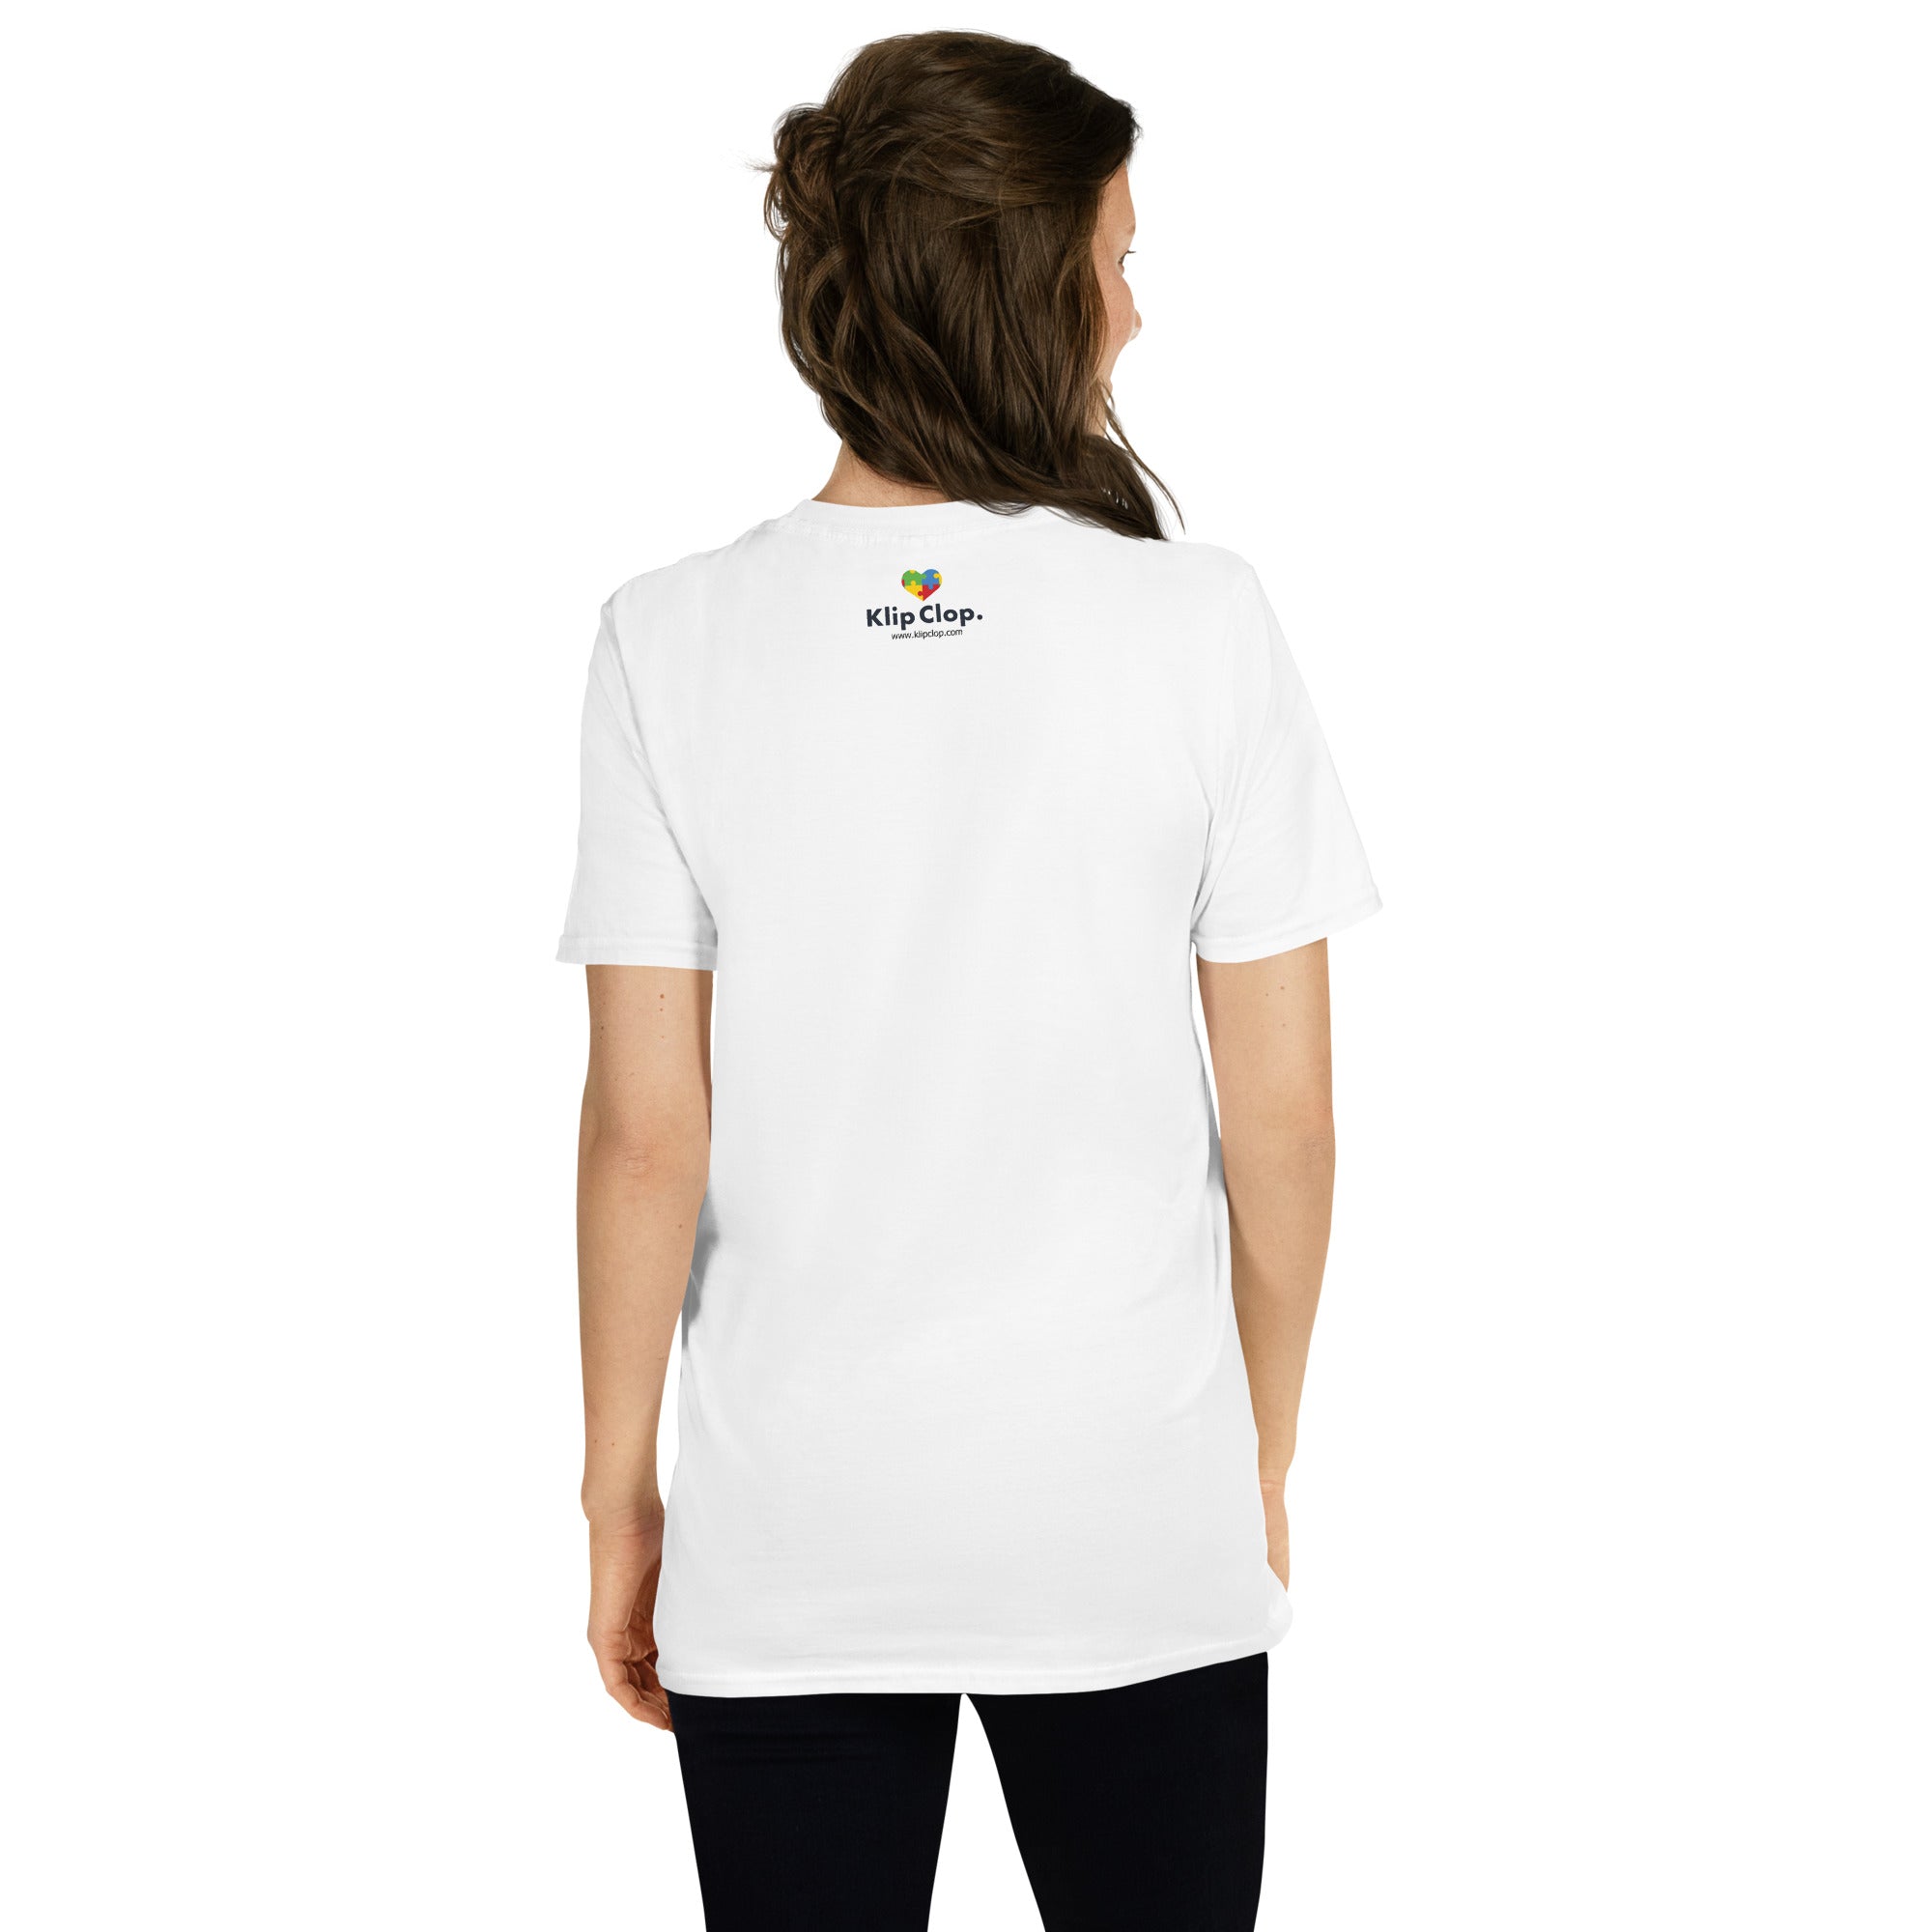 Short-Sleeve Unisex T-Shirt- Be Kind